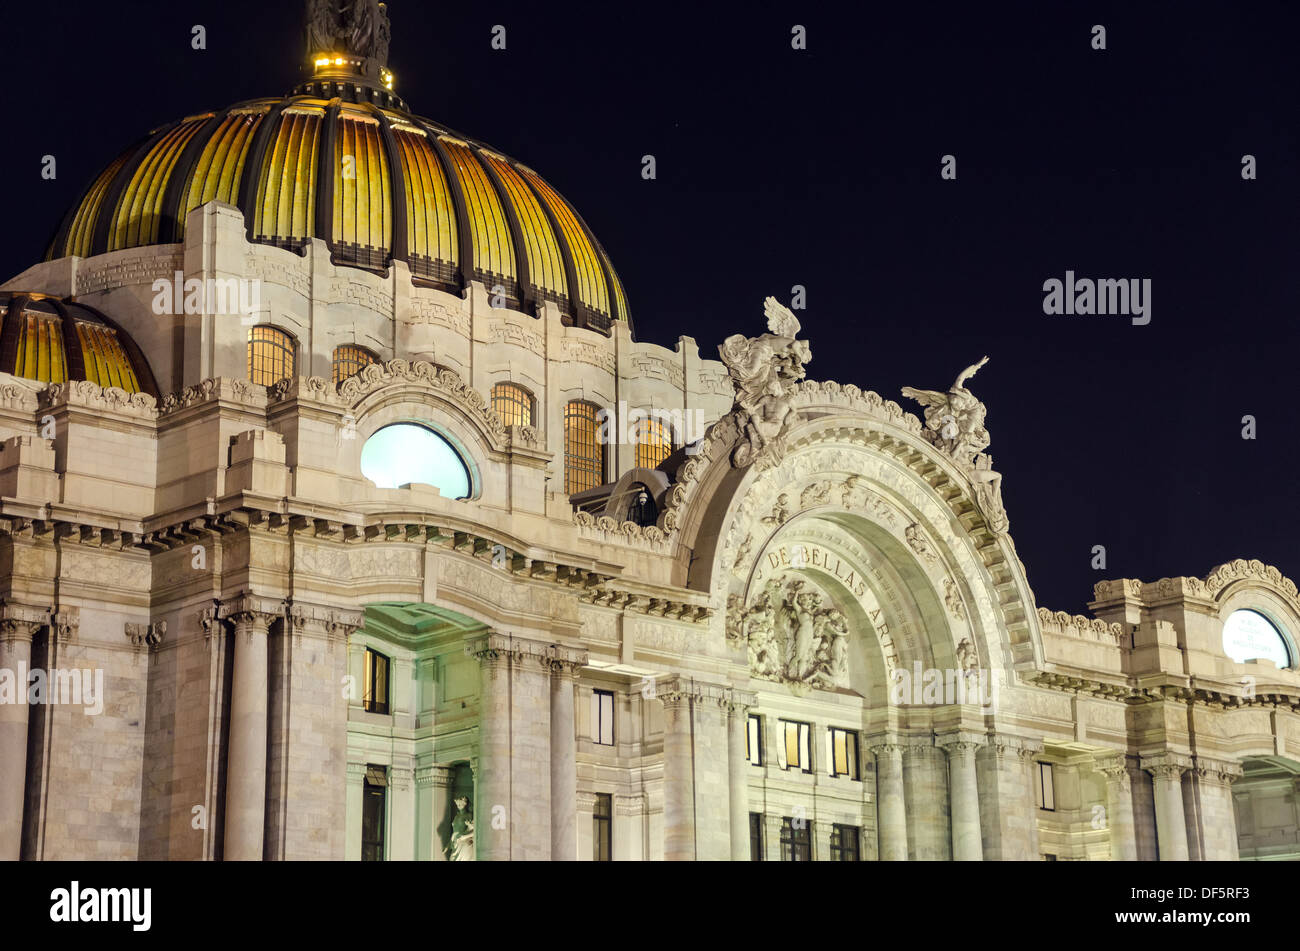 The Fine Arts Palace of Mexico City seen at night Stock Photo